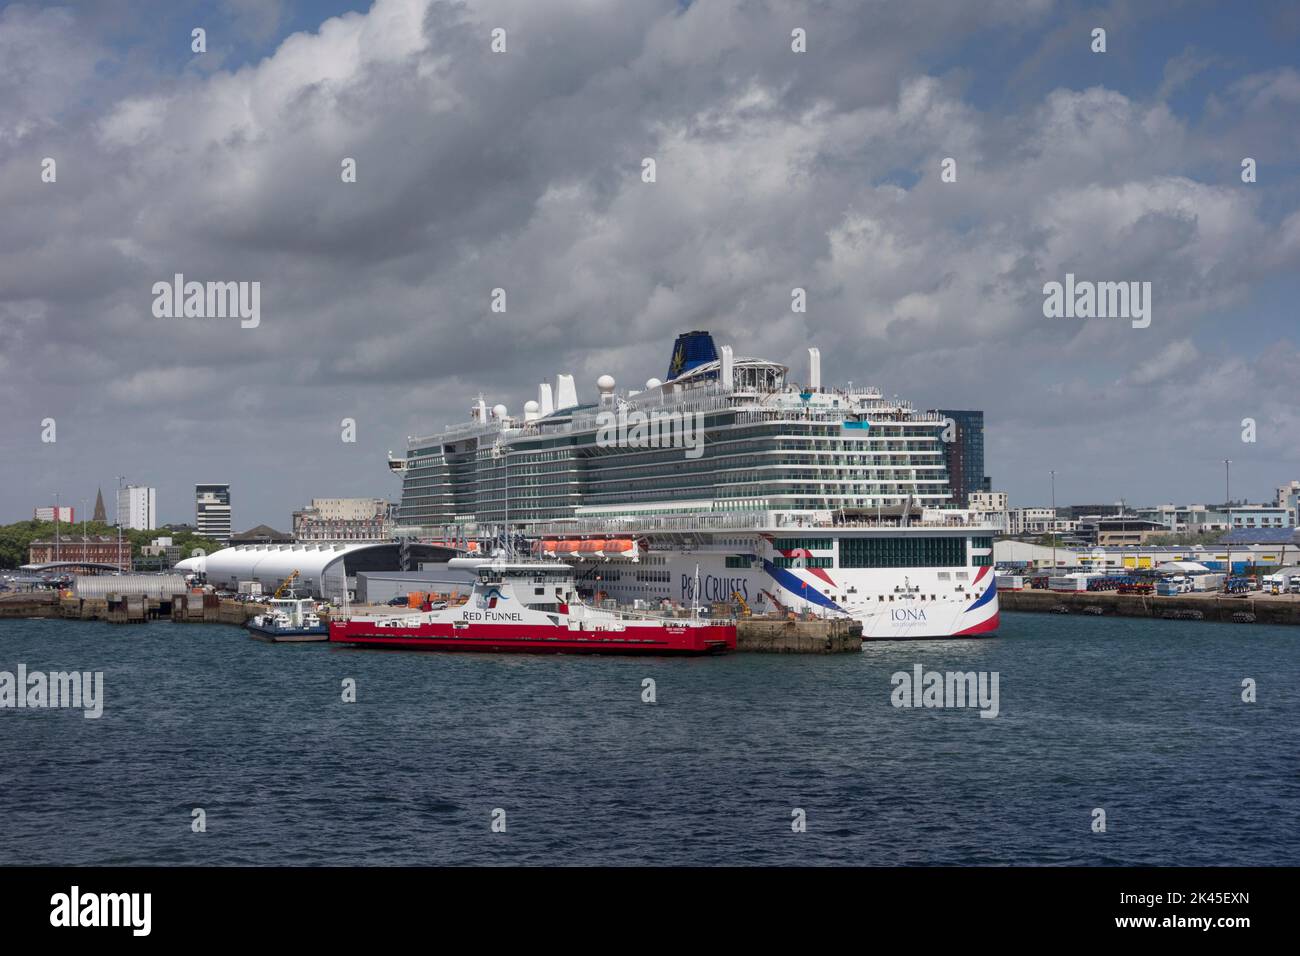 P&O Cruises Iona cruise ship at the port of Southampton, Southampton, UK Stock Photo